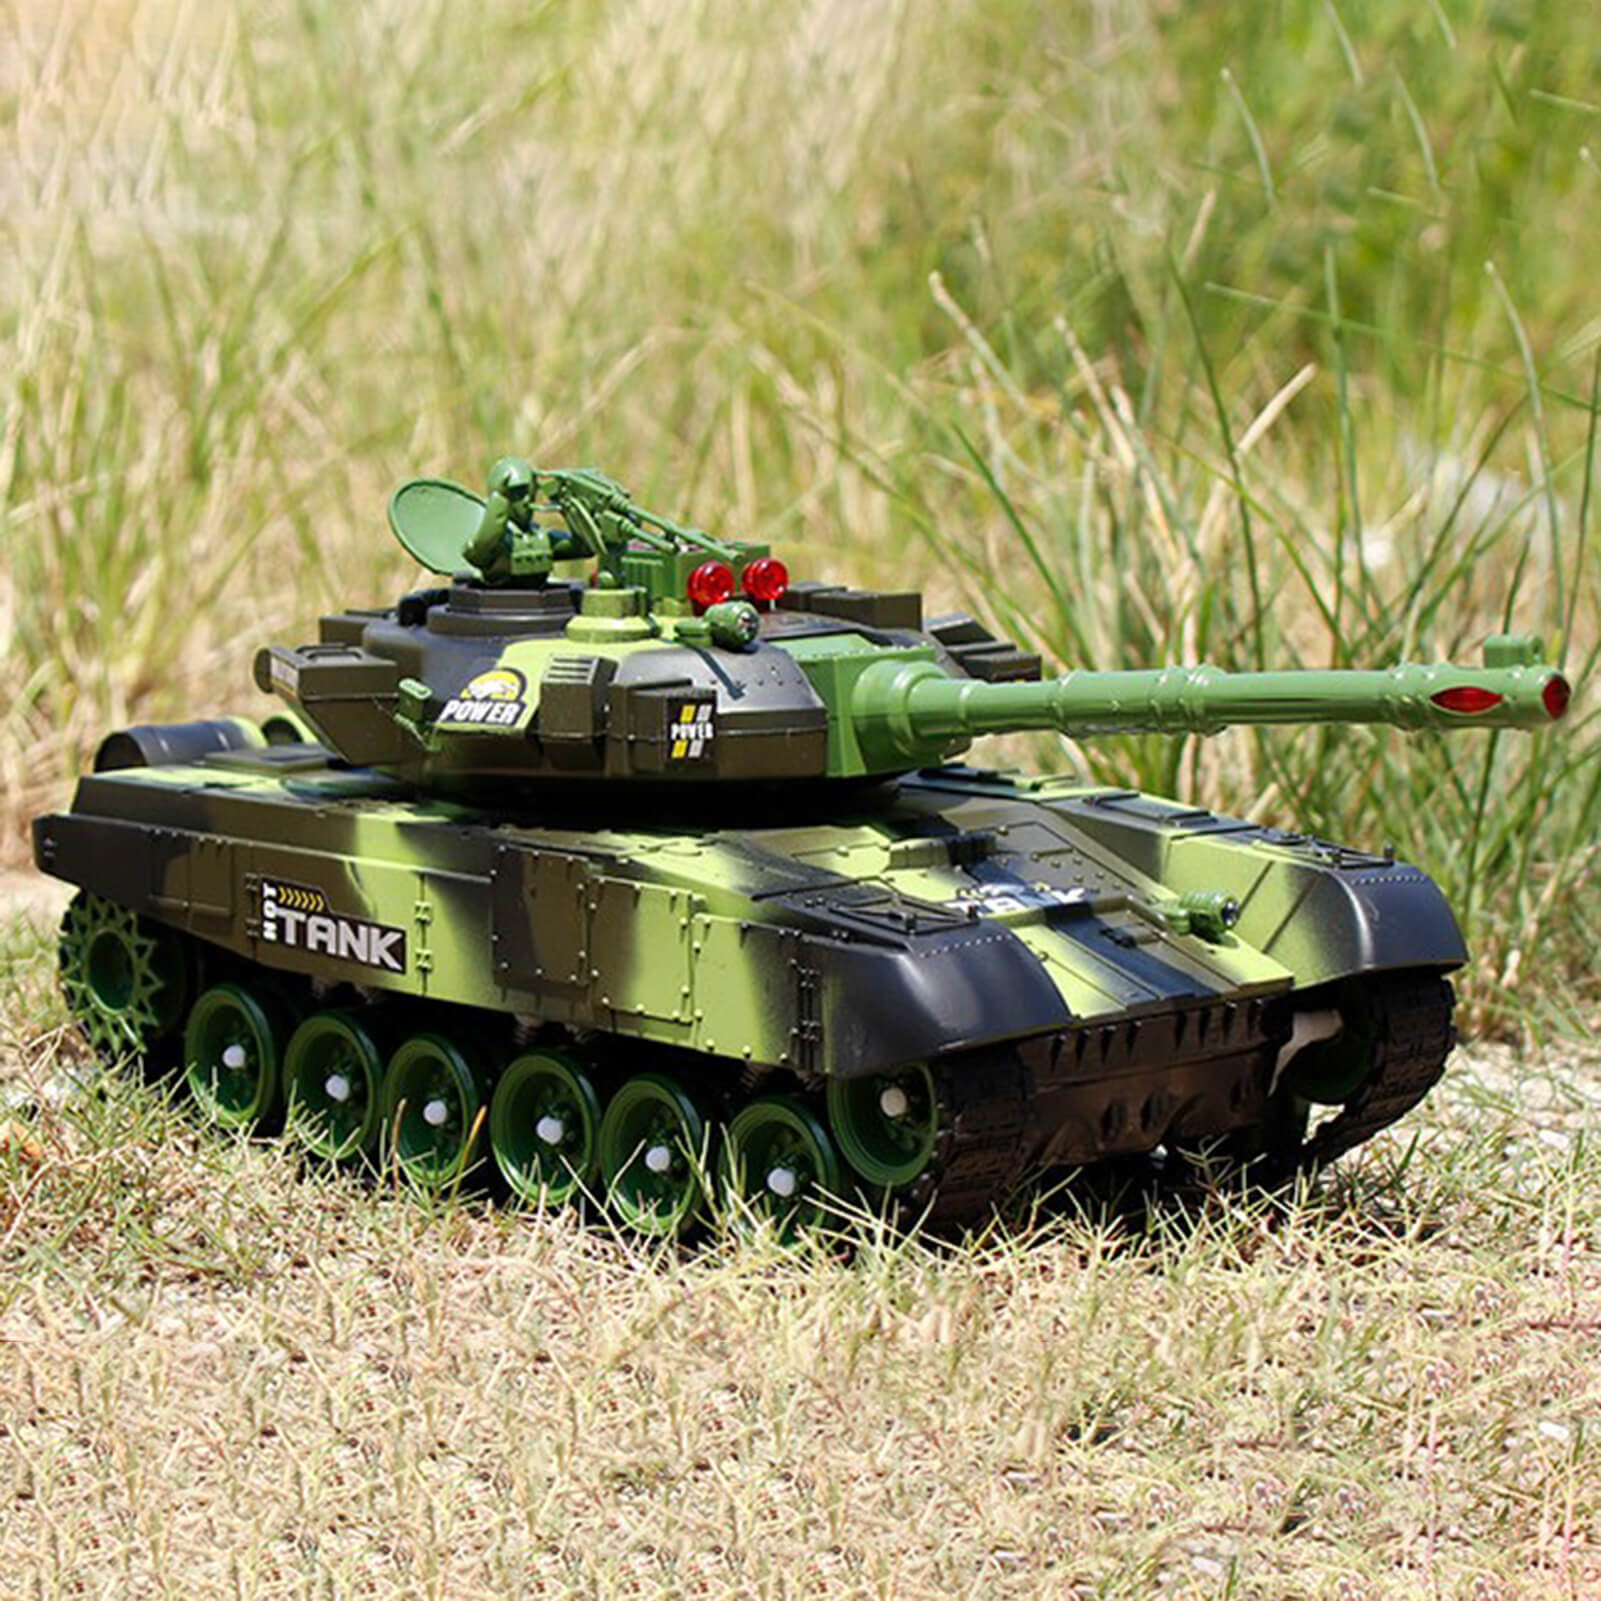 Kids RC Battle Tank Remote Control Army Tank Super Battle Launch Remote Tanks